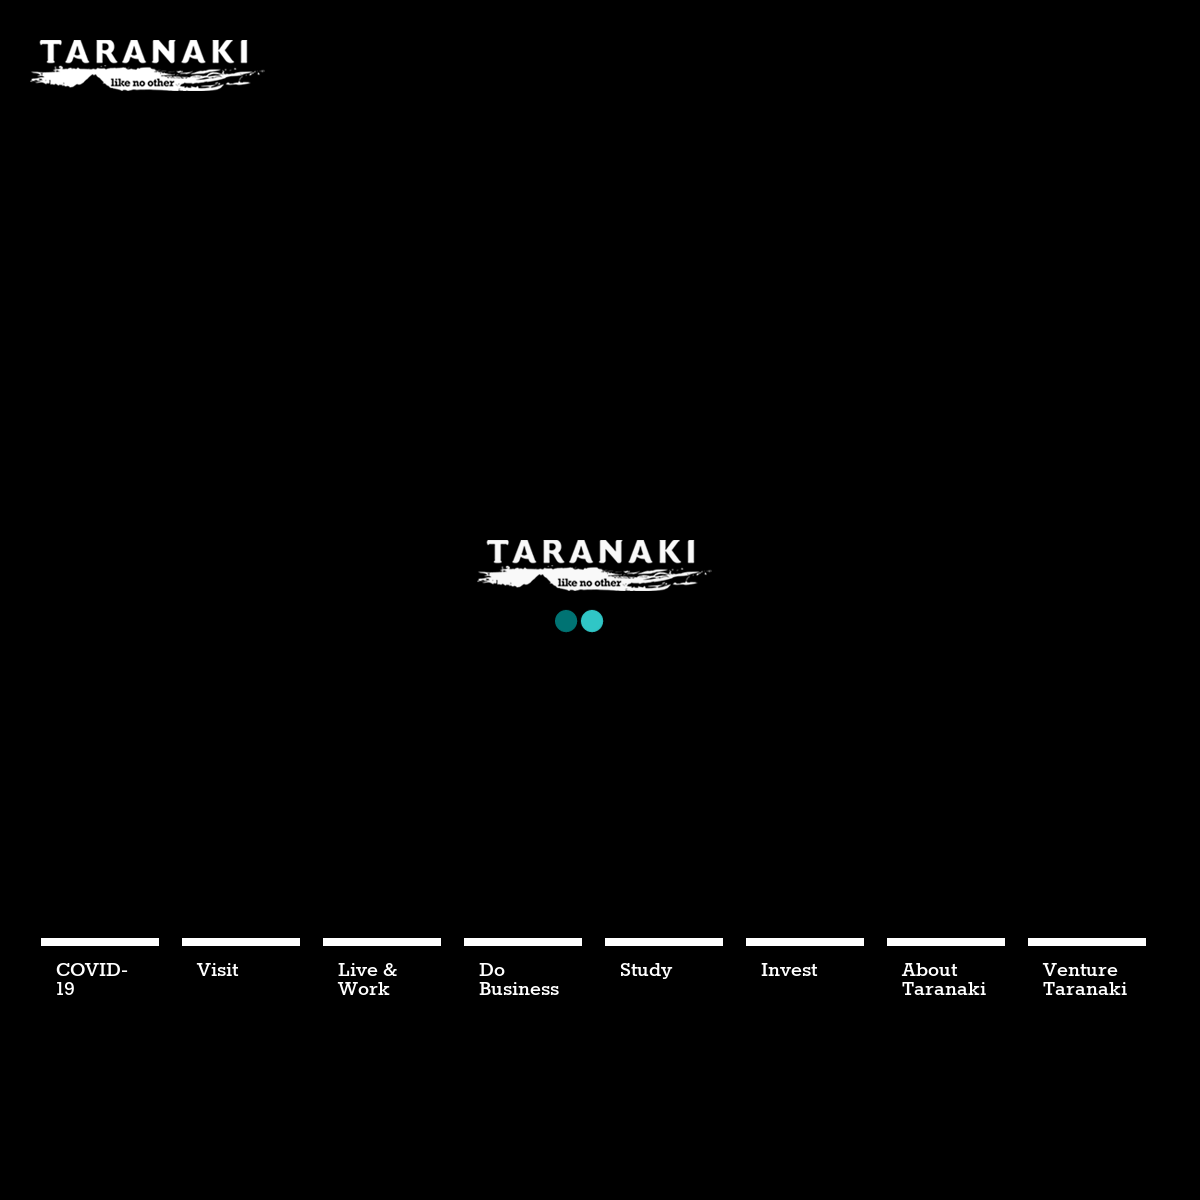 A complete backup of taranaki.info